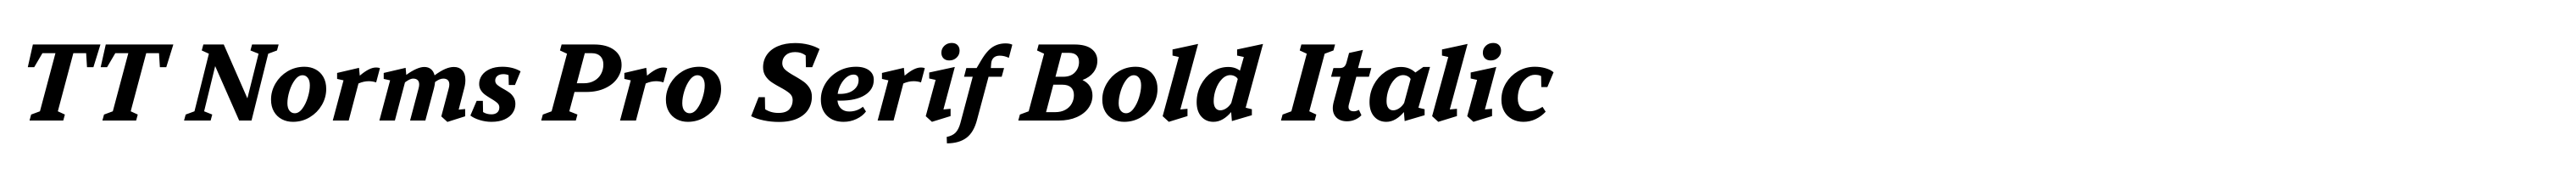 TT Norms Pro Serif Bold Italic